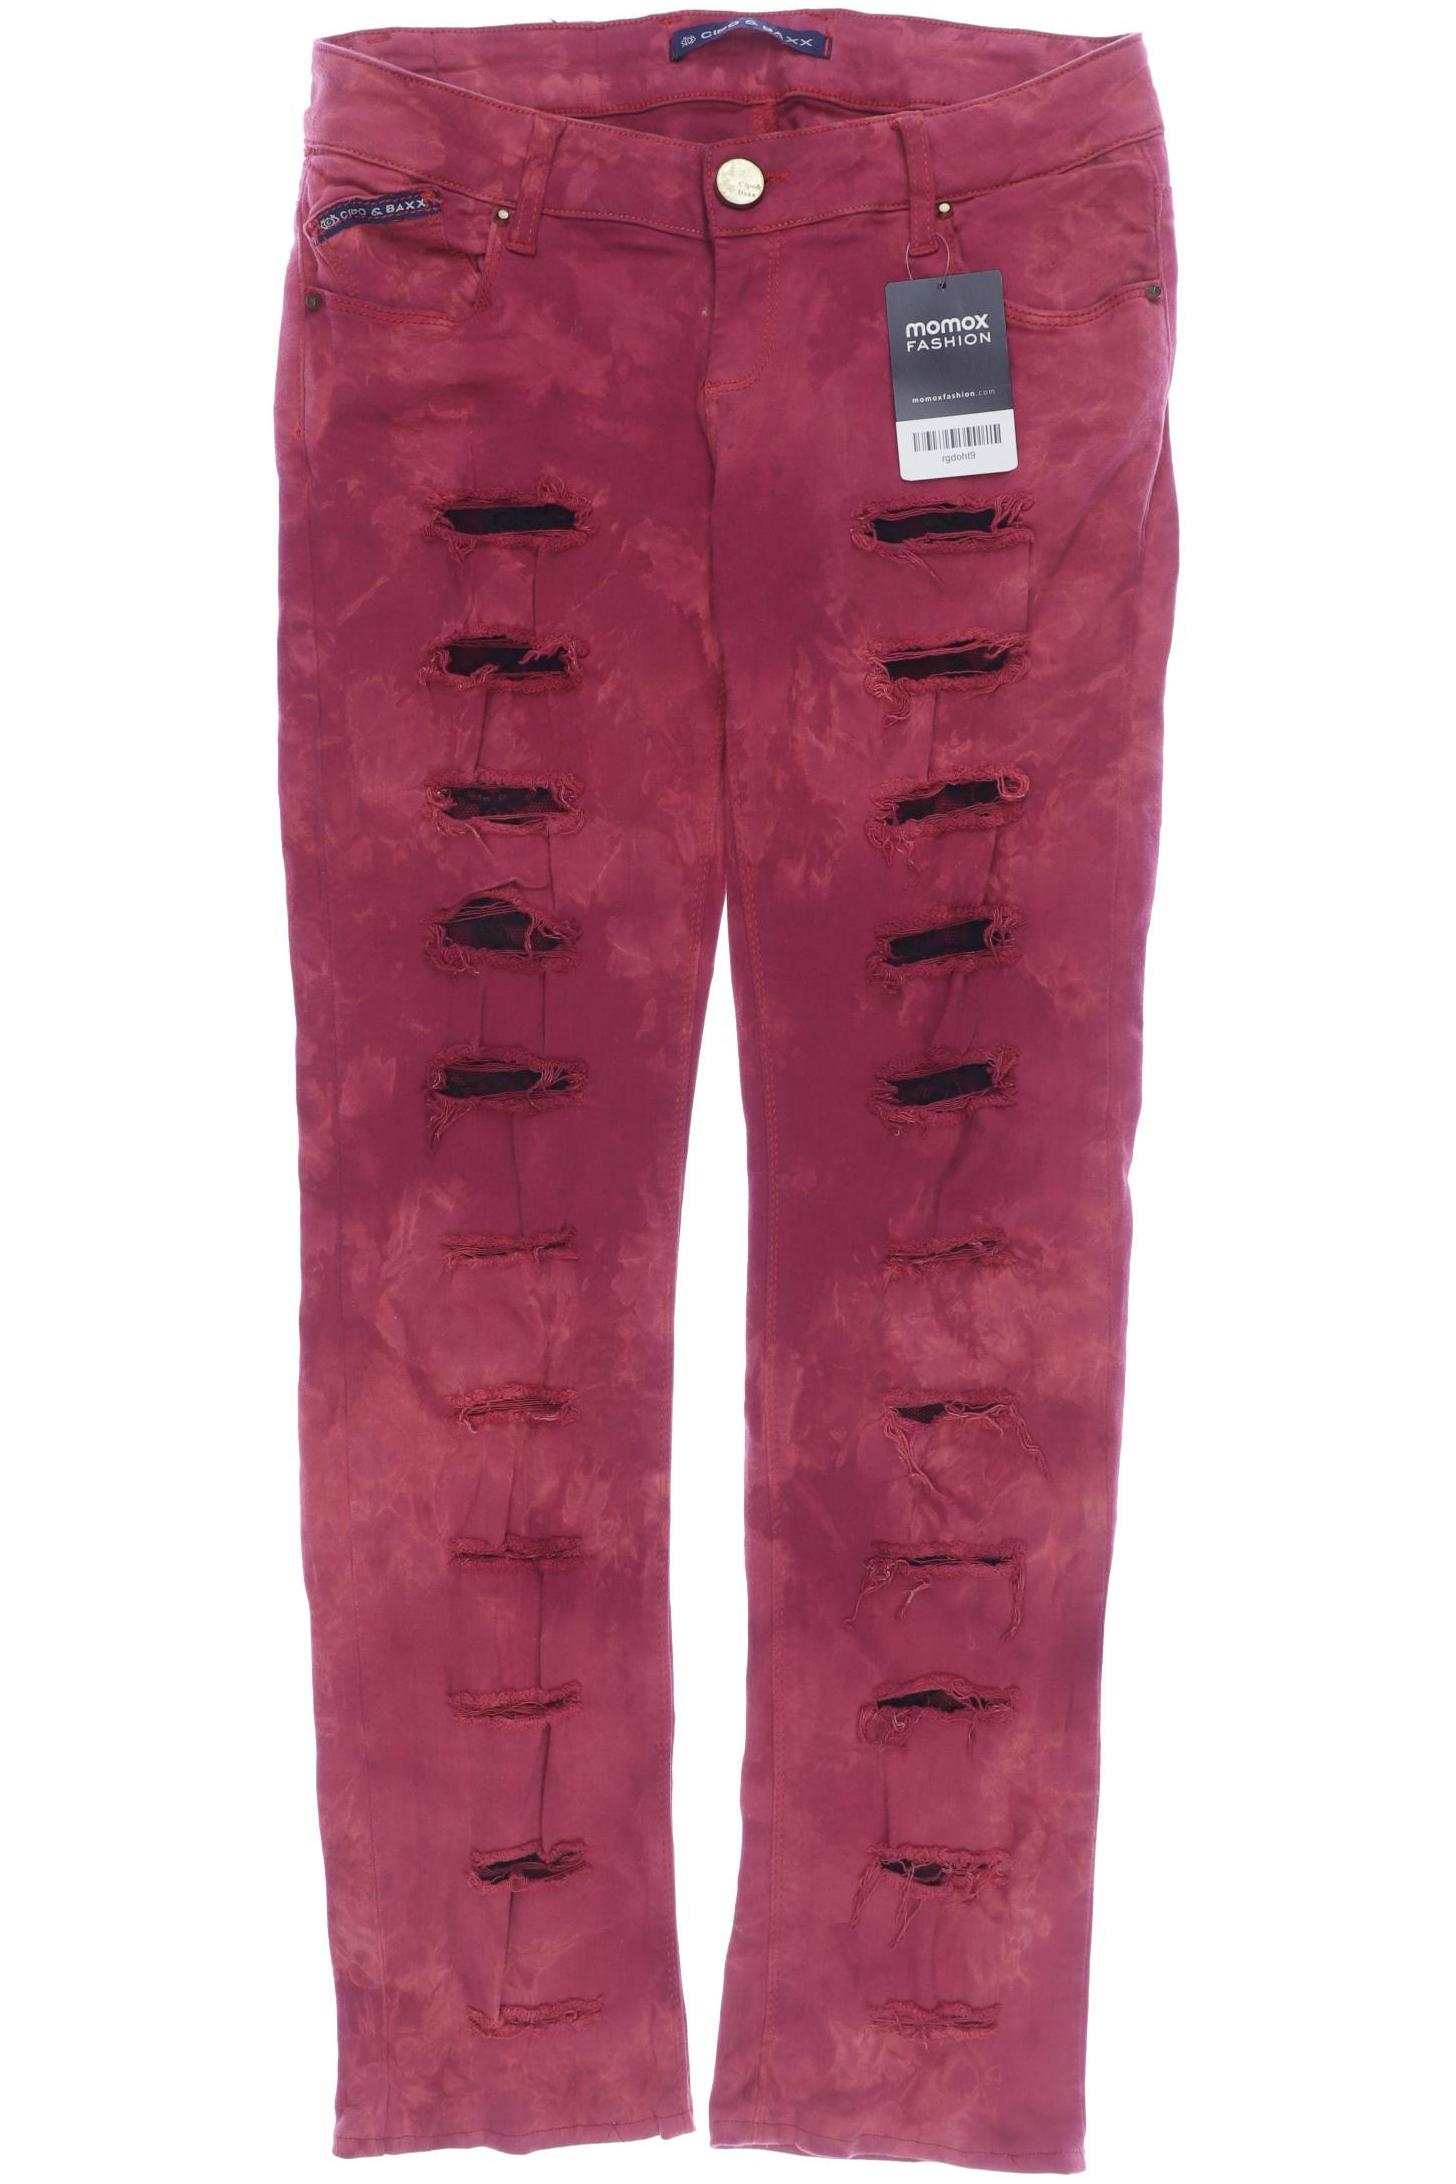 Cipo & Baxx Damen Jeans, rot von Cipo & Baxx